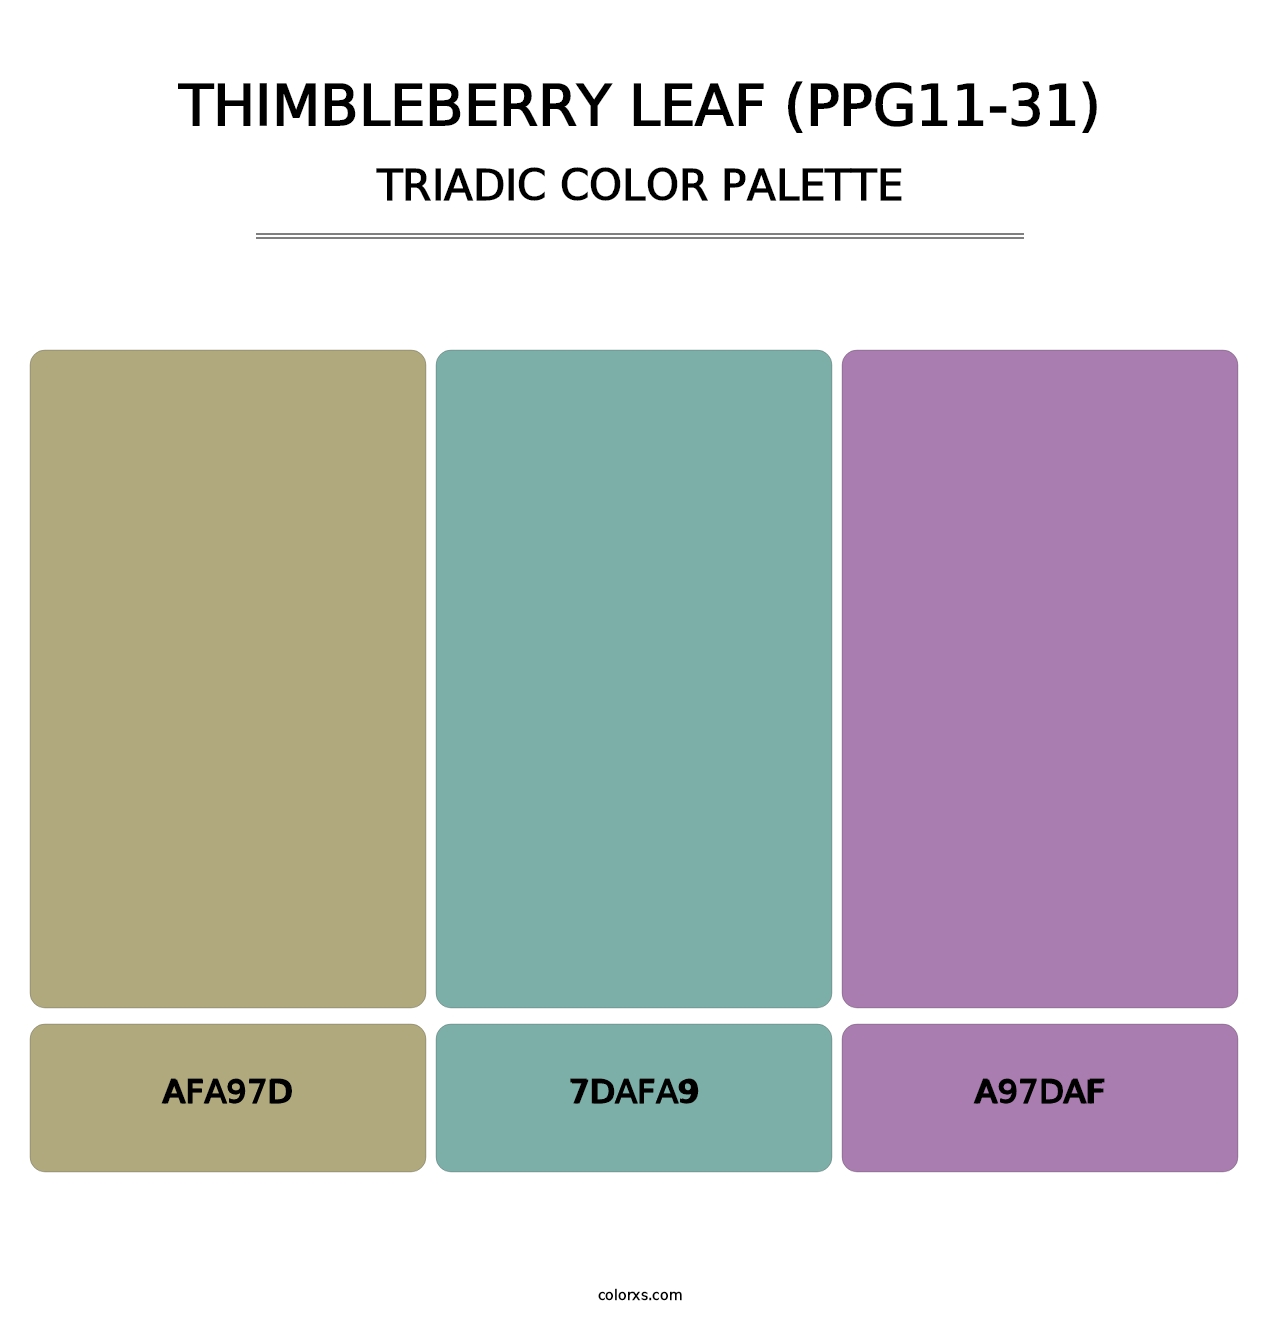 Thimbleberry Leaf (PPG11-31) - Triadic Color Palette